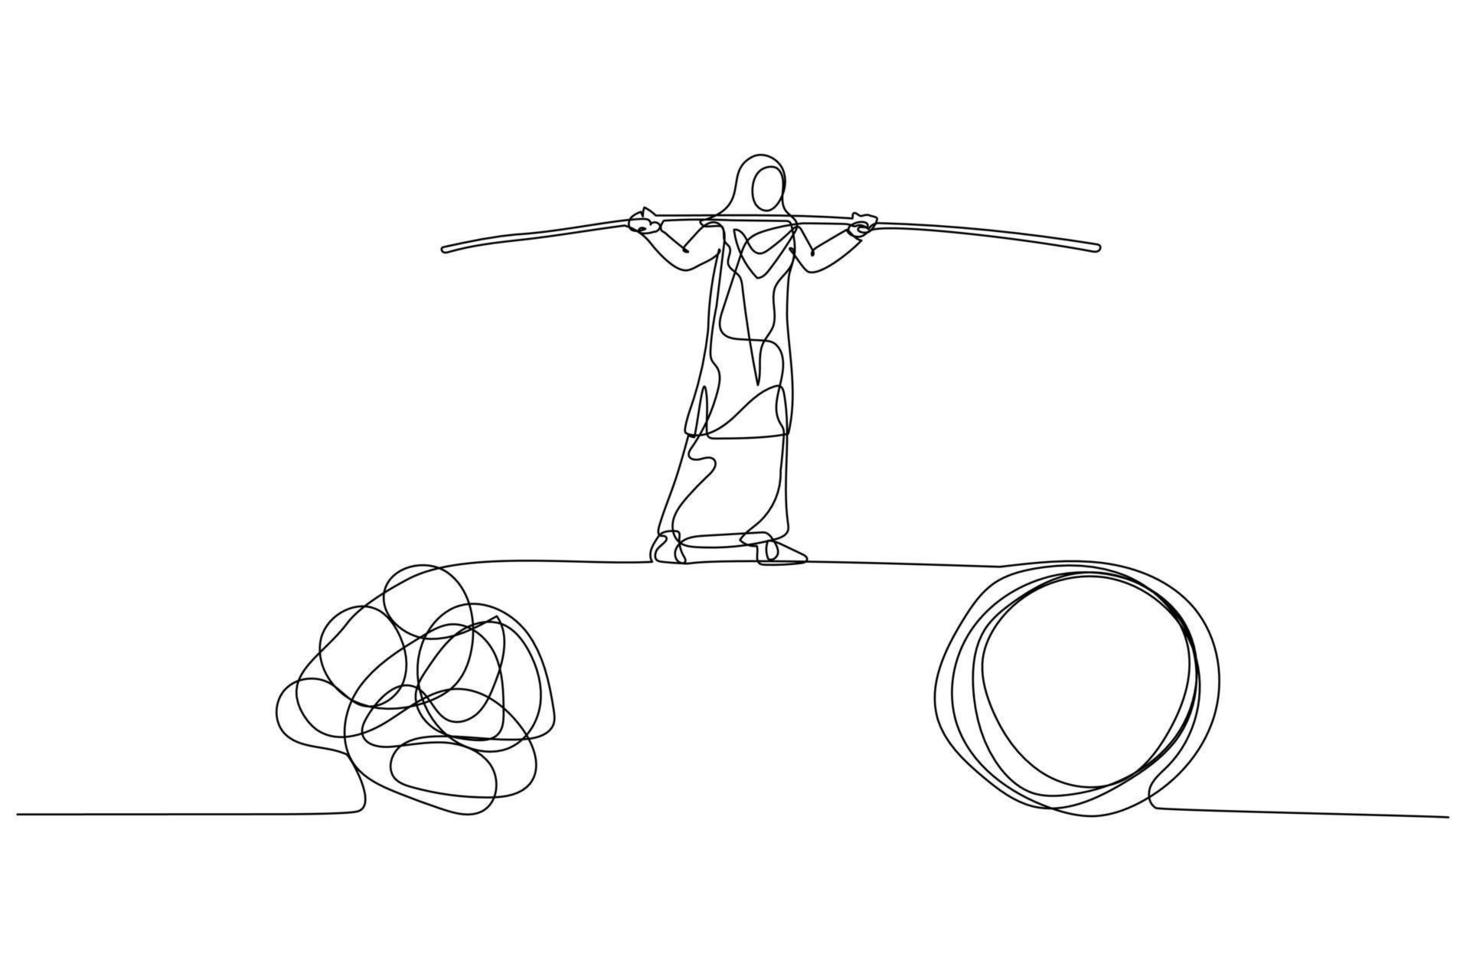 desenho animado de mulher muçulmana anda na corda bamba, equilibrando-se entre o problema. estilo de arte de linha única vetor